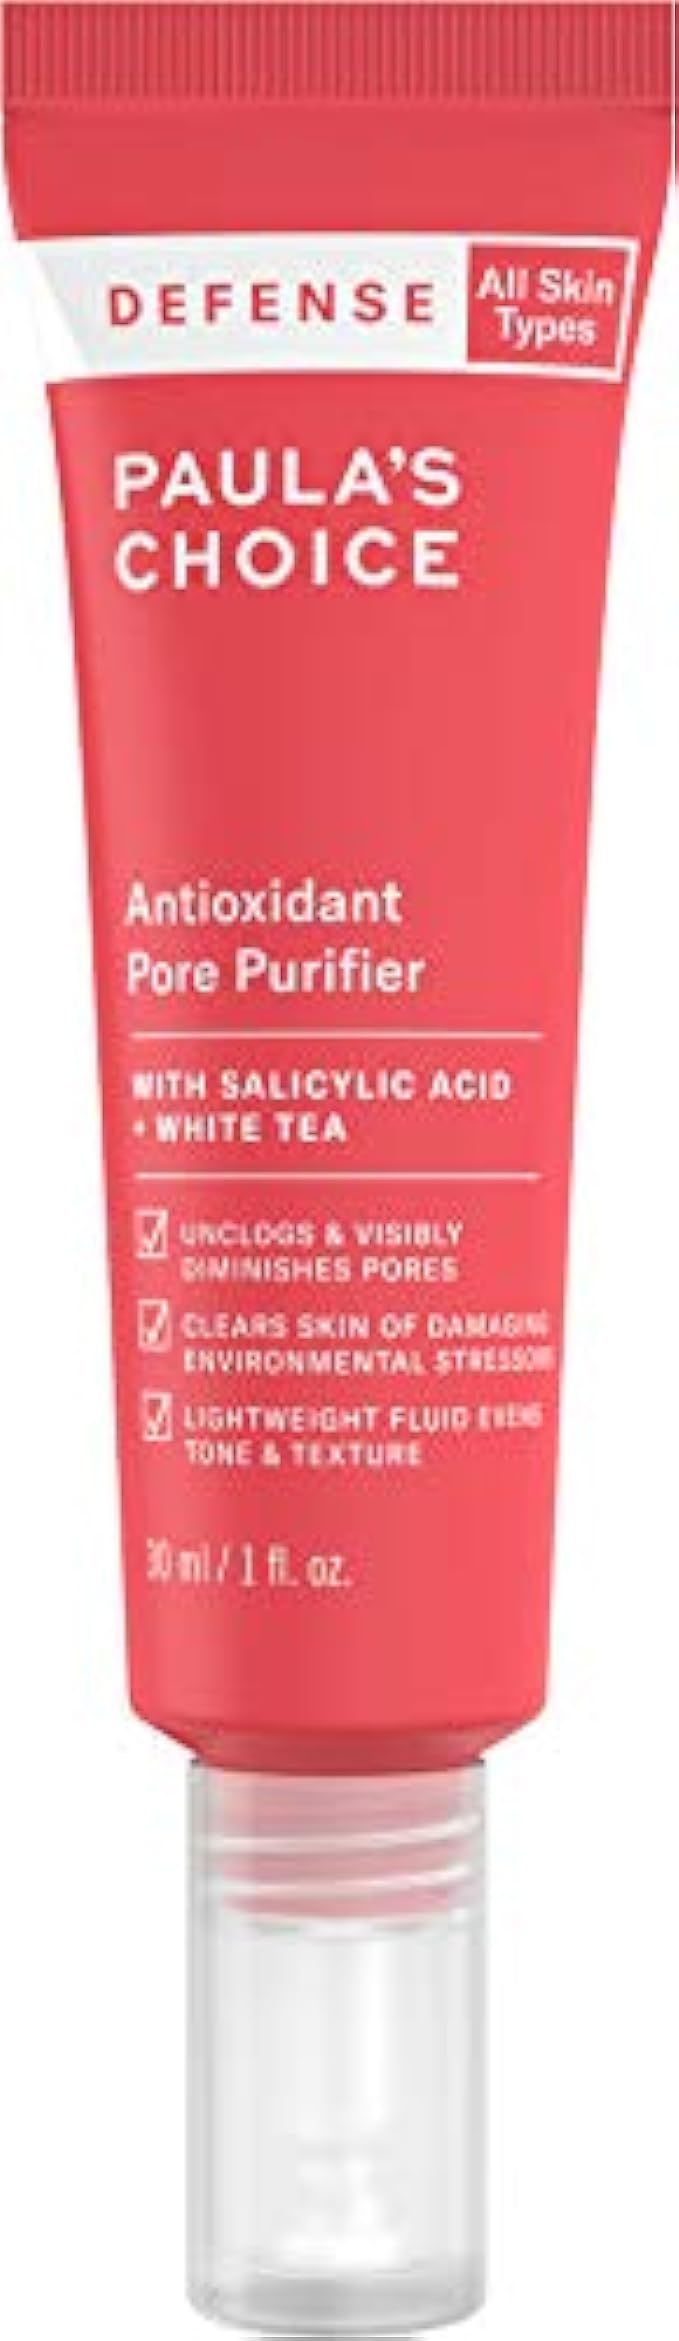 Paula's Choice-DEFENSE Antioxidant Pore Purifier, Concentrated Serum w/Azelaic Acid, Salicylic Acid  | Amazon (US)